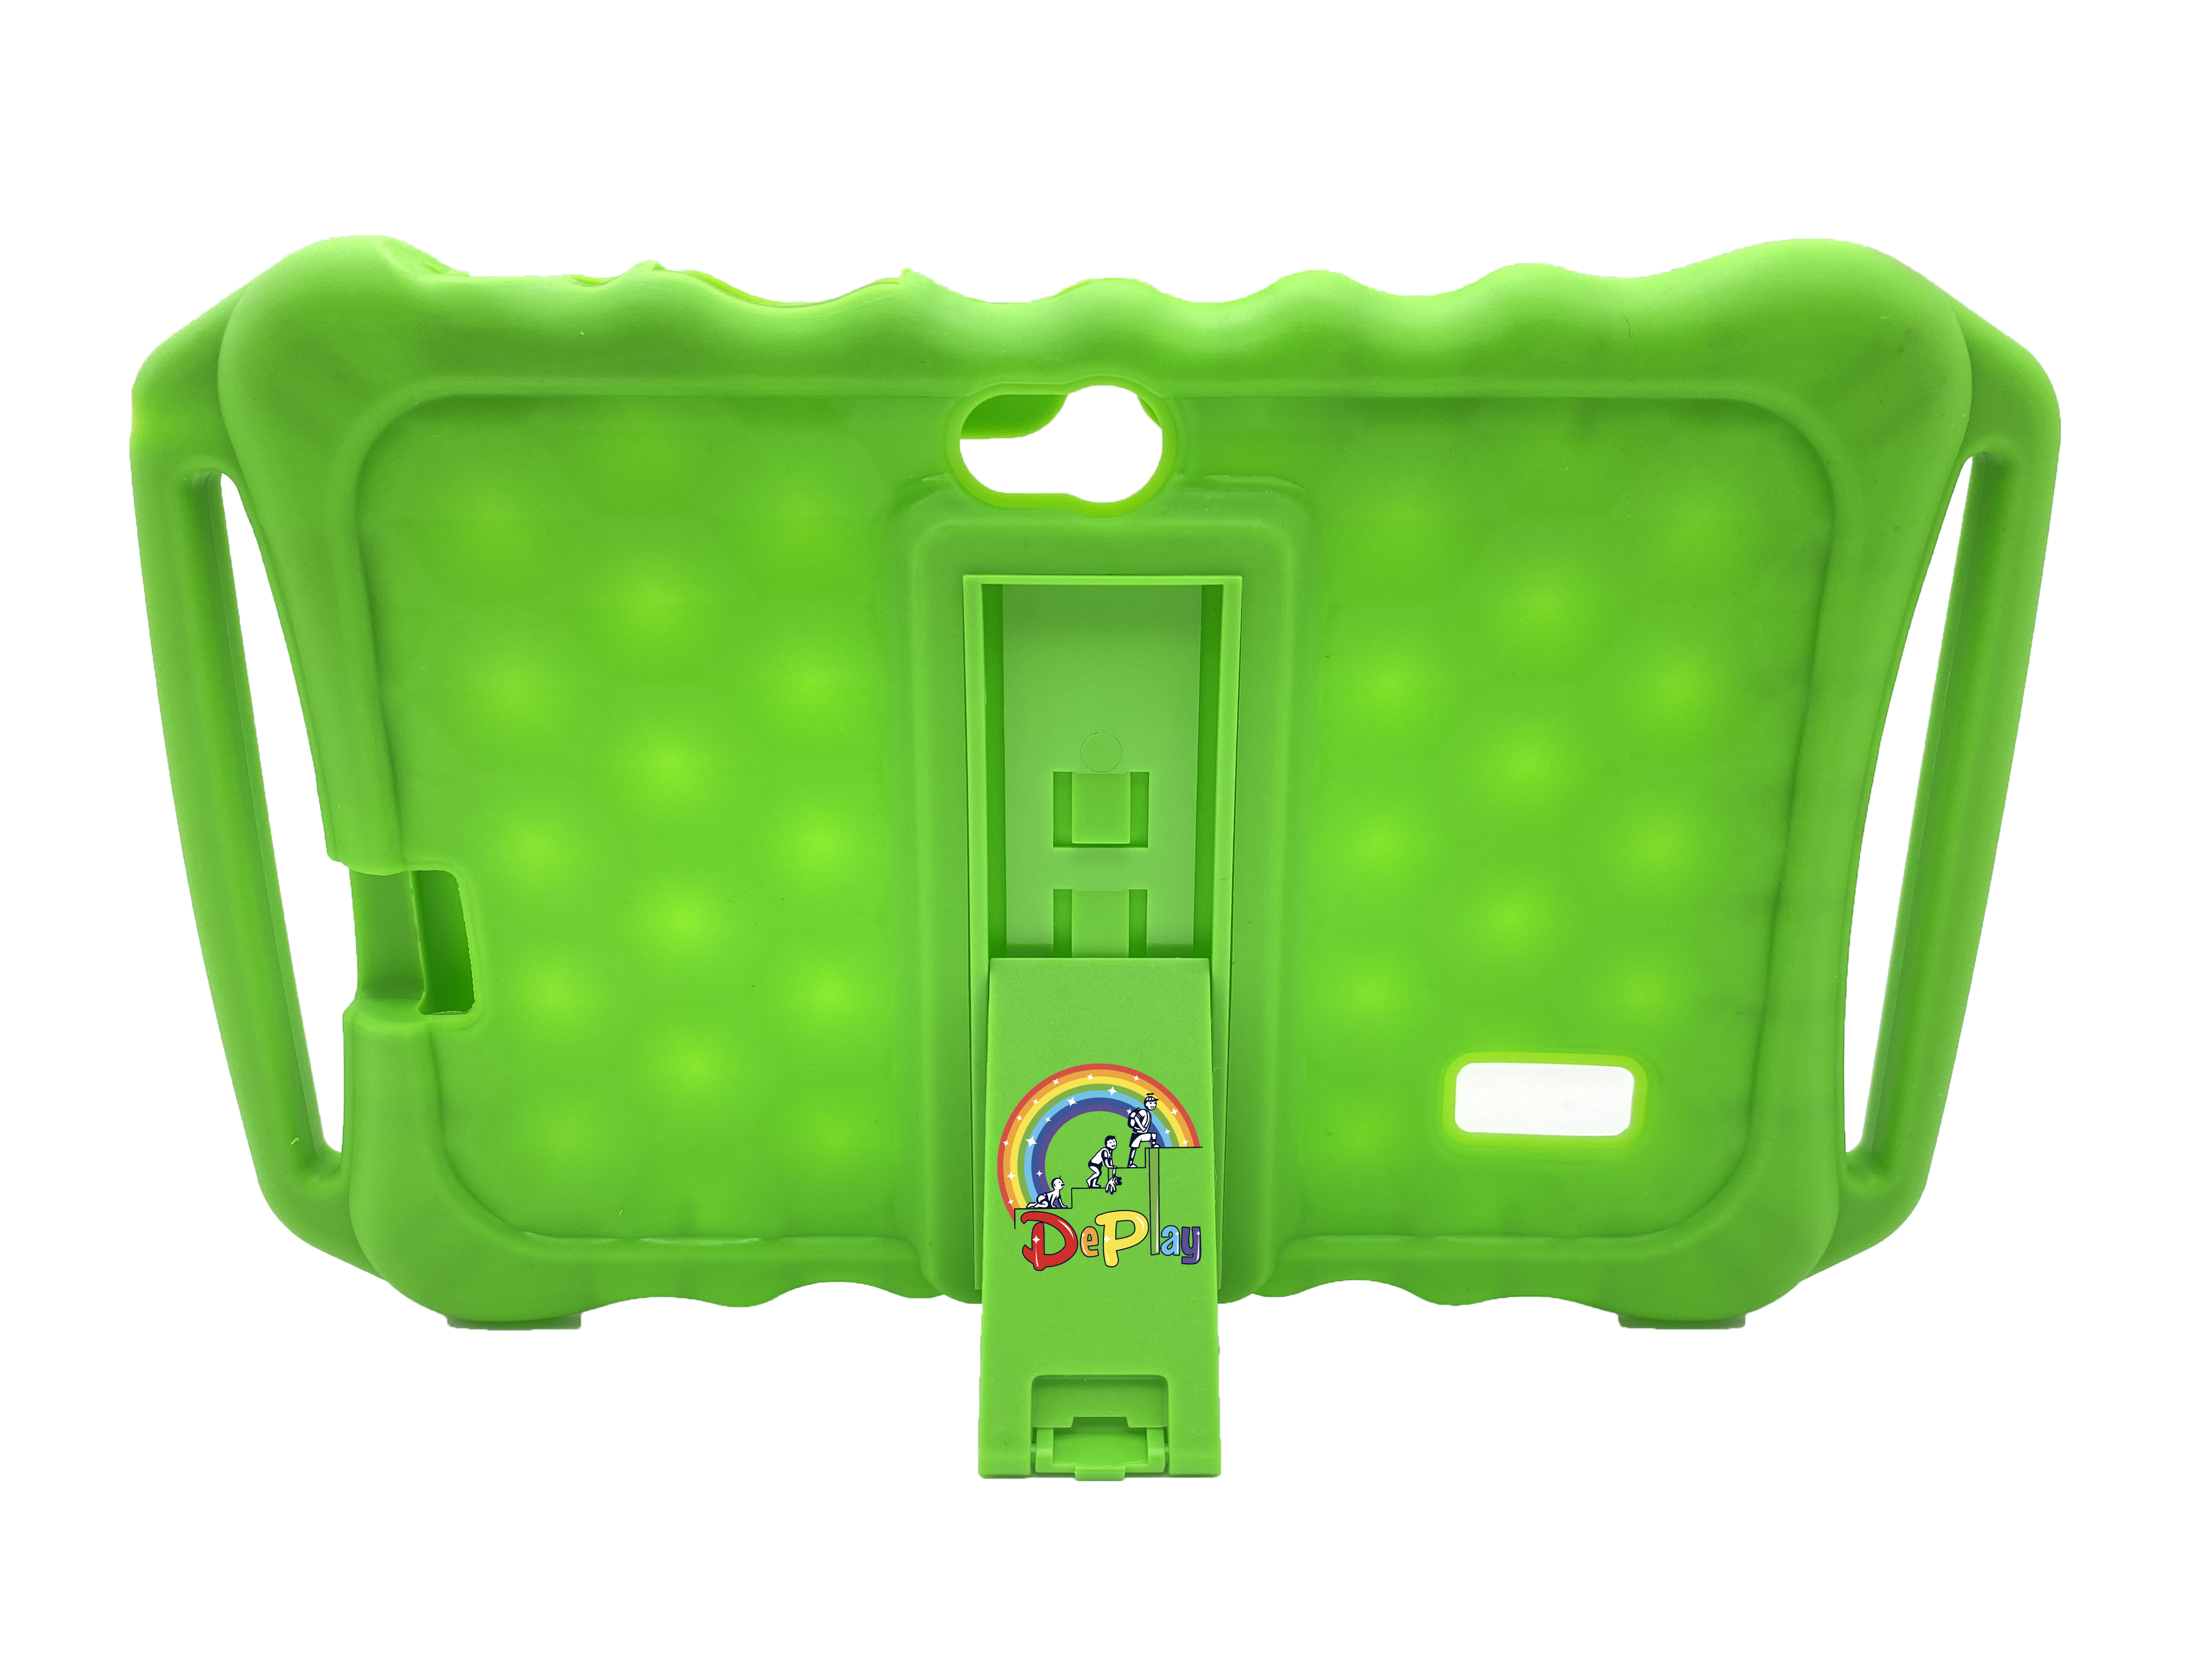 DePlay Kinder Tablet Silikon Schutzhülle - Grün